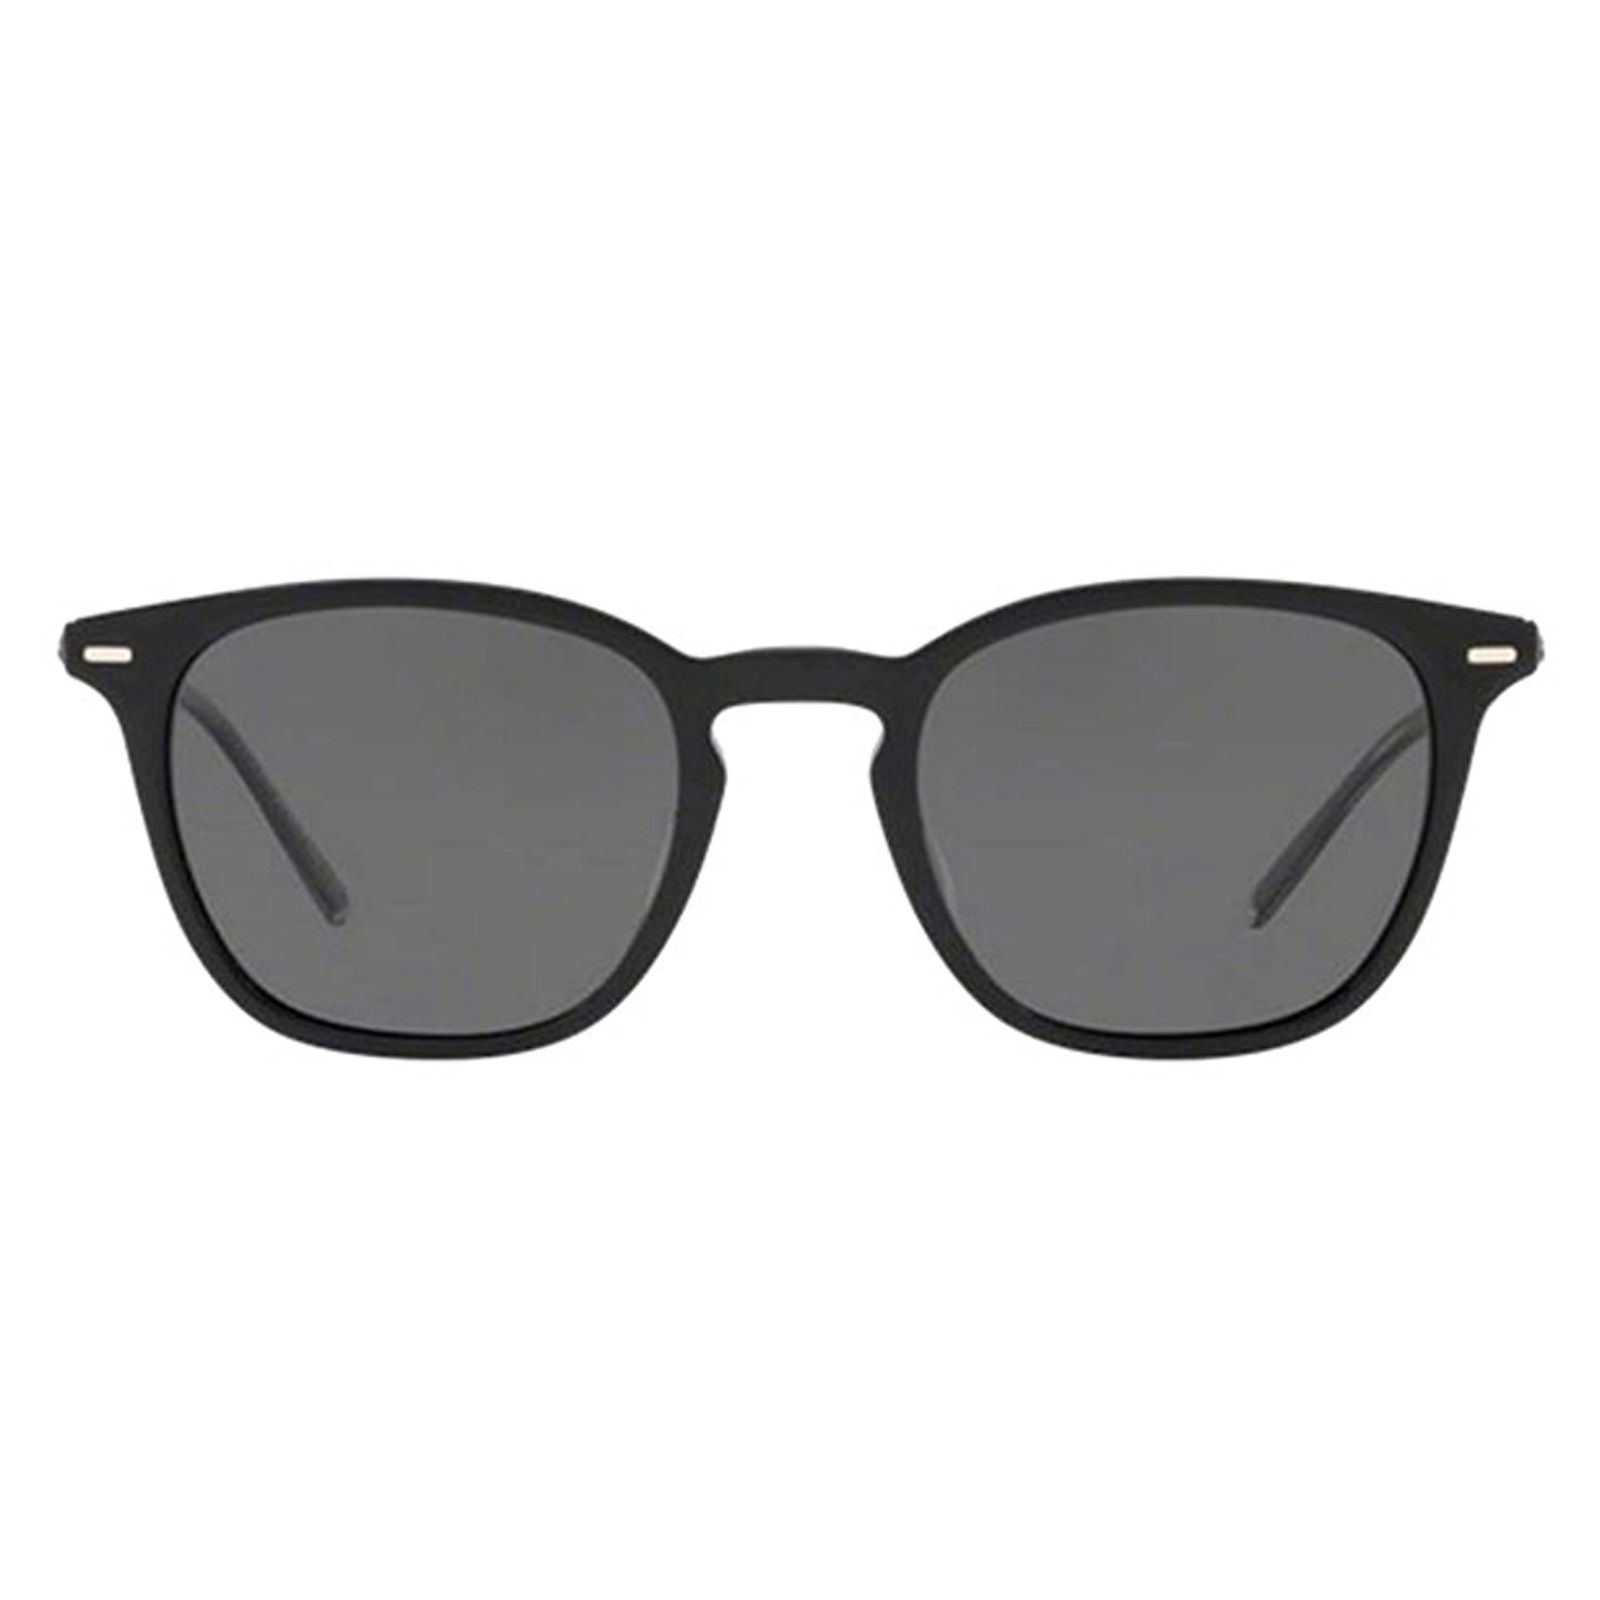 عینک آفتابی الیور پیپلز مدل OV5183V 001003 45 -  - 1